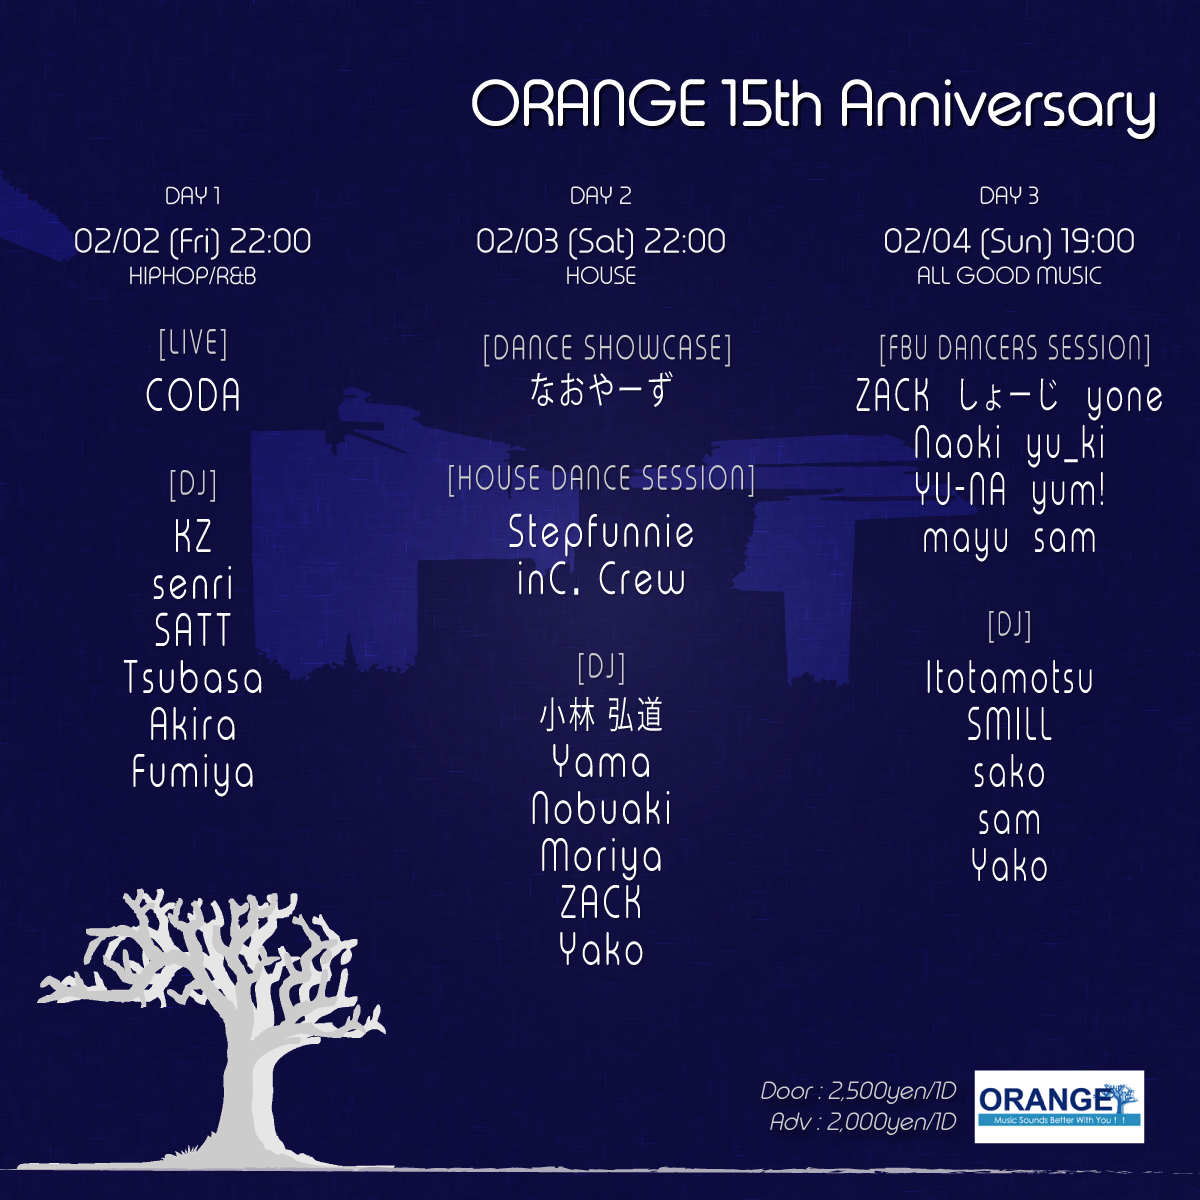 ORANGE 15th Anniversary Party Day 2